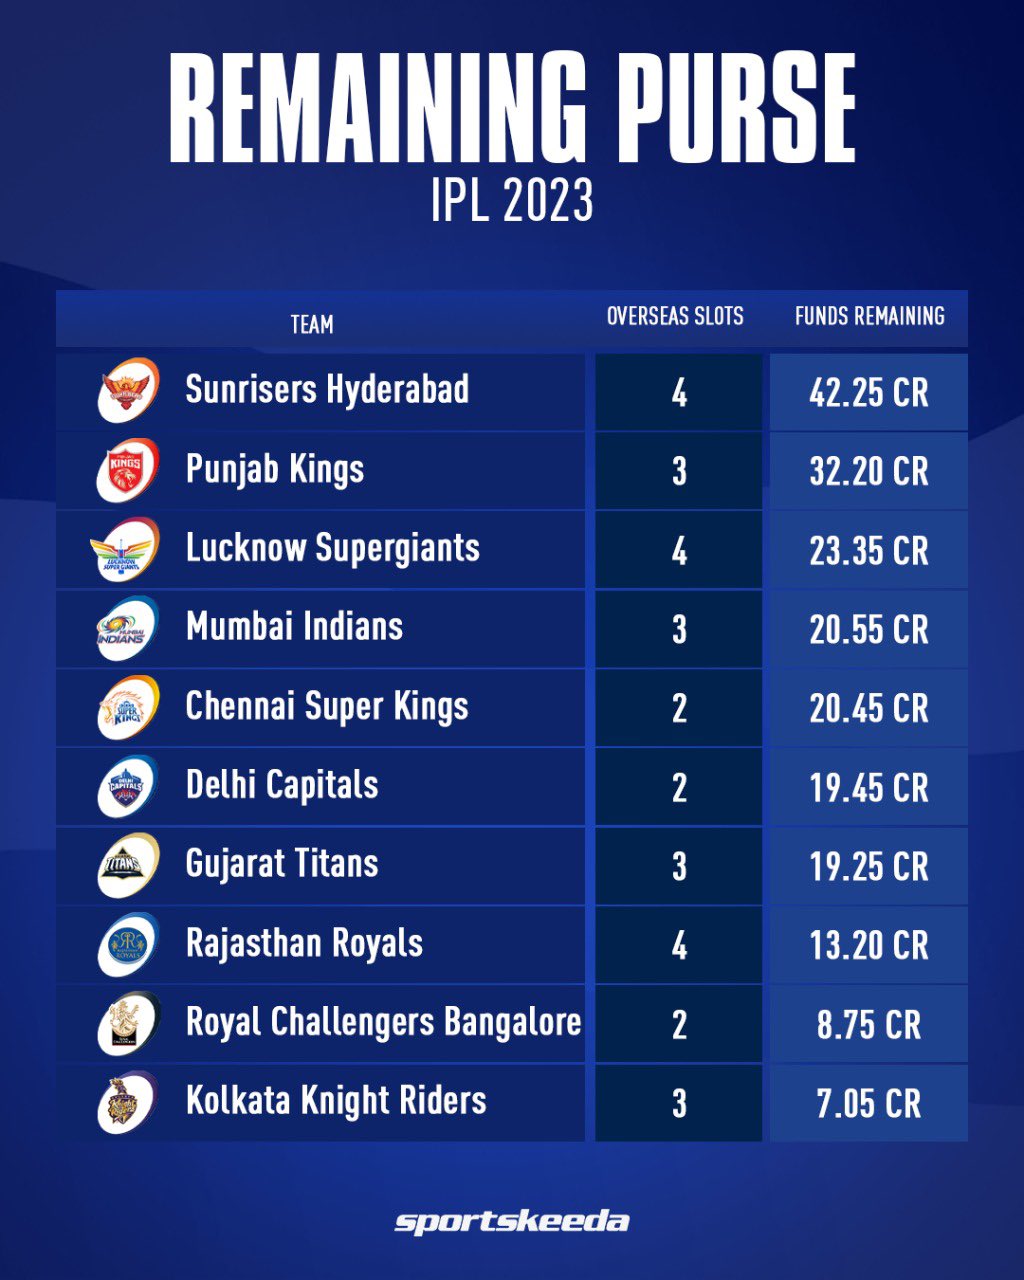 IPL 2020: Know the salary of Virat Kohli, other Royal Challengers Bangalore  players, remaining purse - myKhel